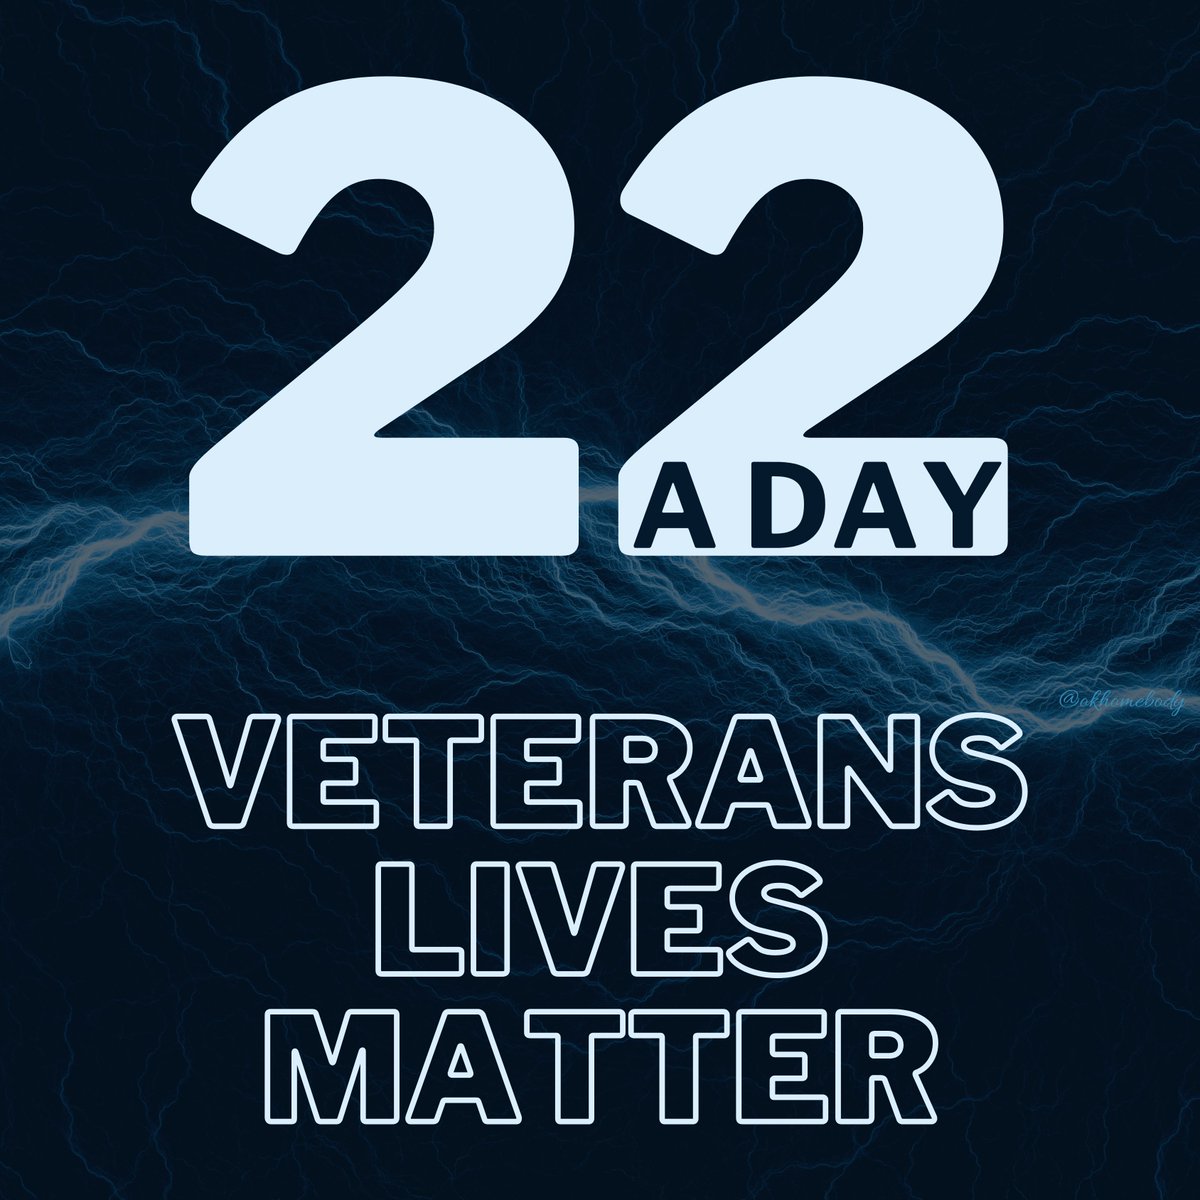 🇺🇸 #WarriorWednesday #Buddy✅with #Veterans 🙏RH ❤️#BuddyChecksMatter because #VeteransLivesMatter❤️ ⭐️ 🇺🇸 Repost #EndVeteranSuicide #dial988press1 🇺🇸⭐️ 🇺🇸@Mike04091780 @roll_tide74 @Ohiogabulldog ✈️ 🇺🇸@Sean93061307 @RandyBelcher57 @FrizzTm @P_FFlyers✈️ 🇺🇸@MikeGoodlander